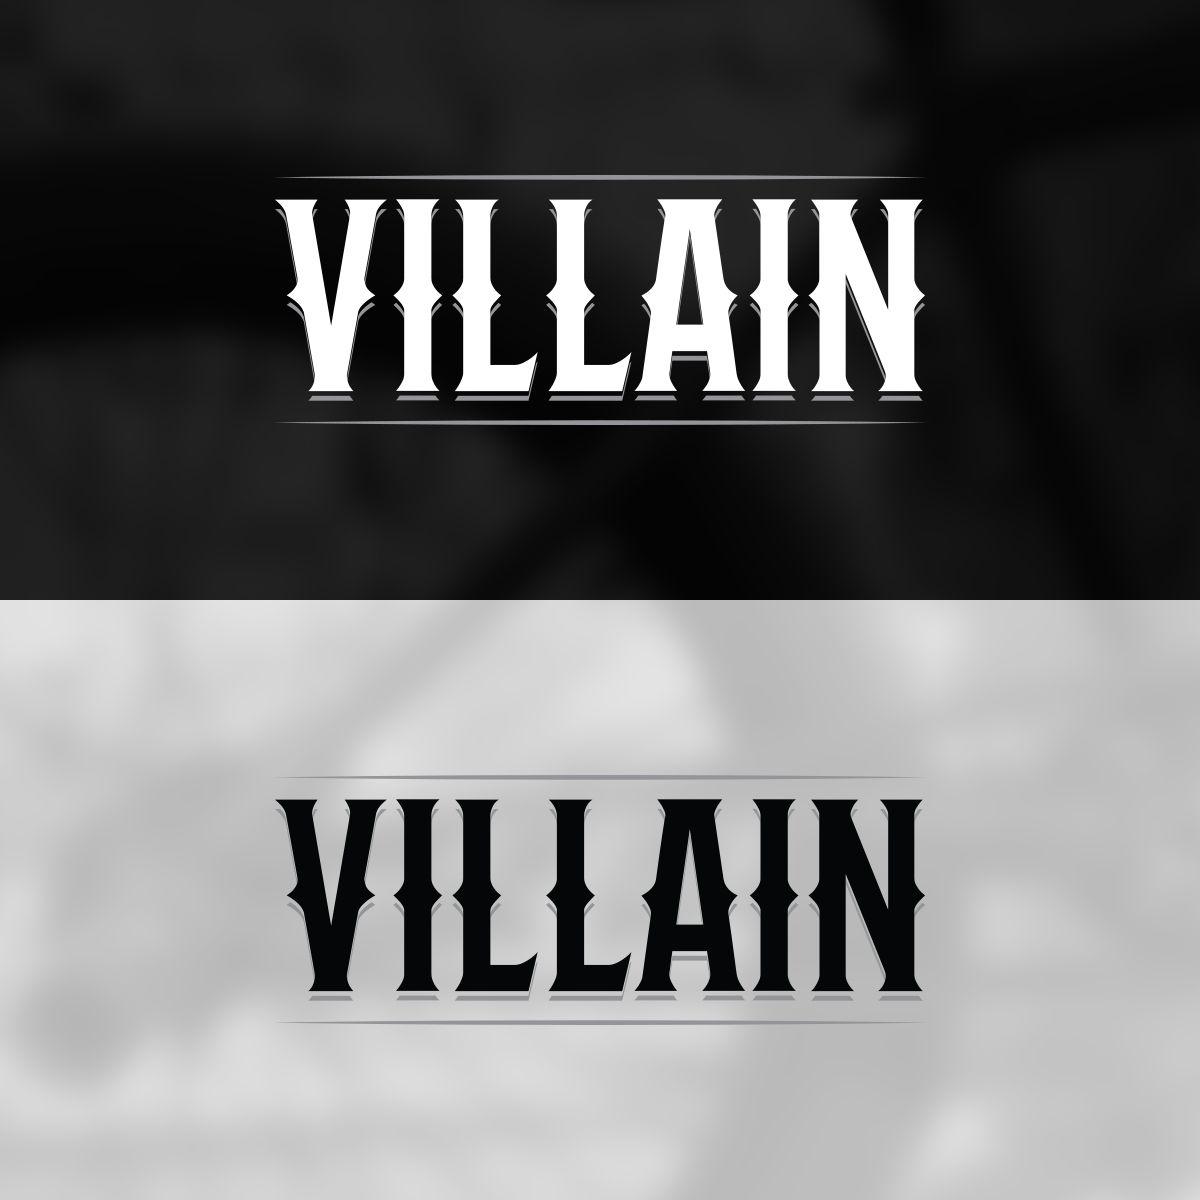 Villian Logo - Logo Design for VILLAIN or Villain by Roland Hawk | Design #13822688